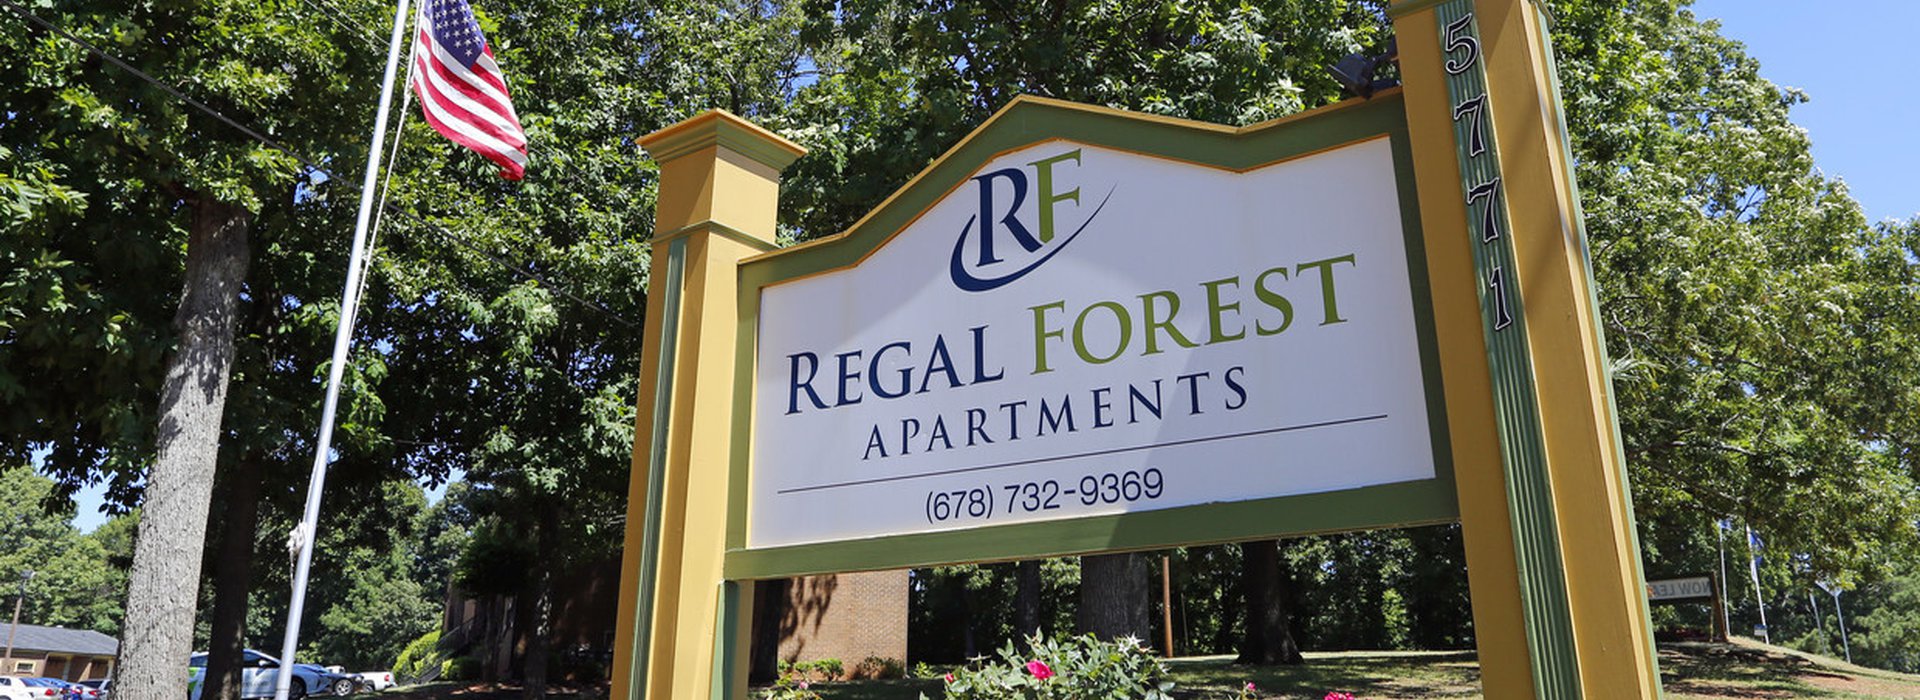 Regal Forest Sign